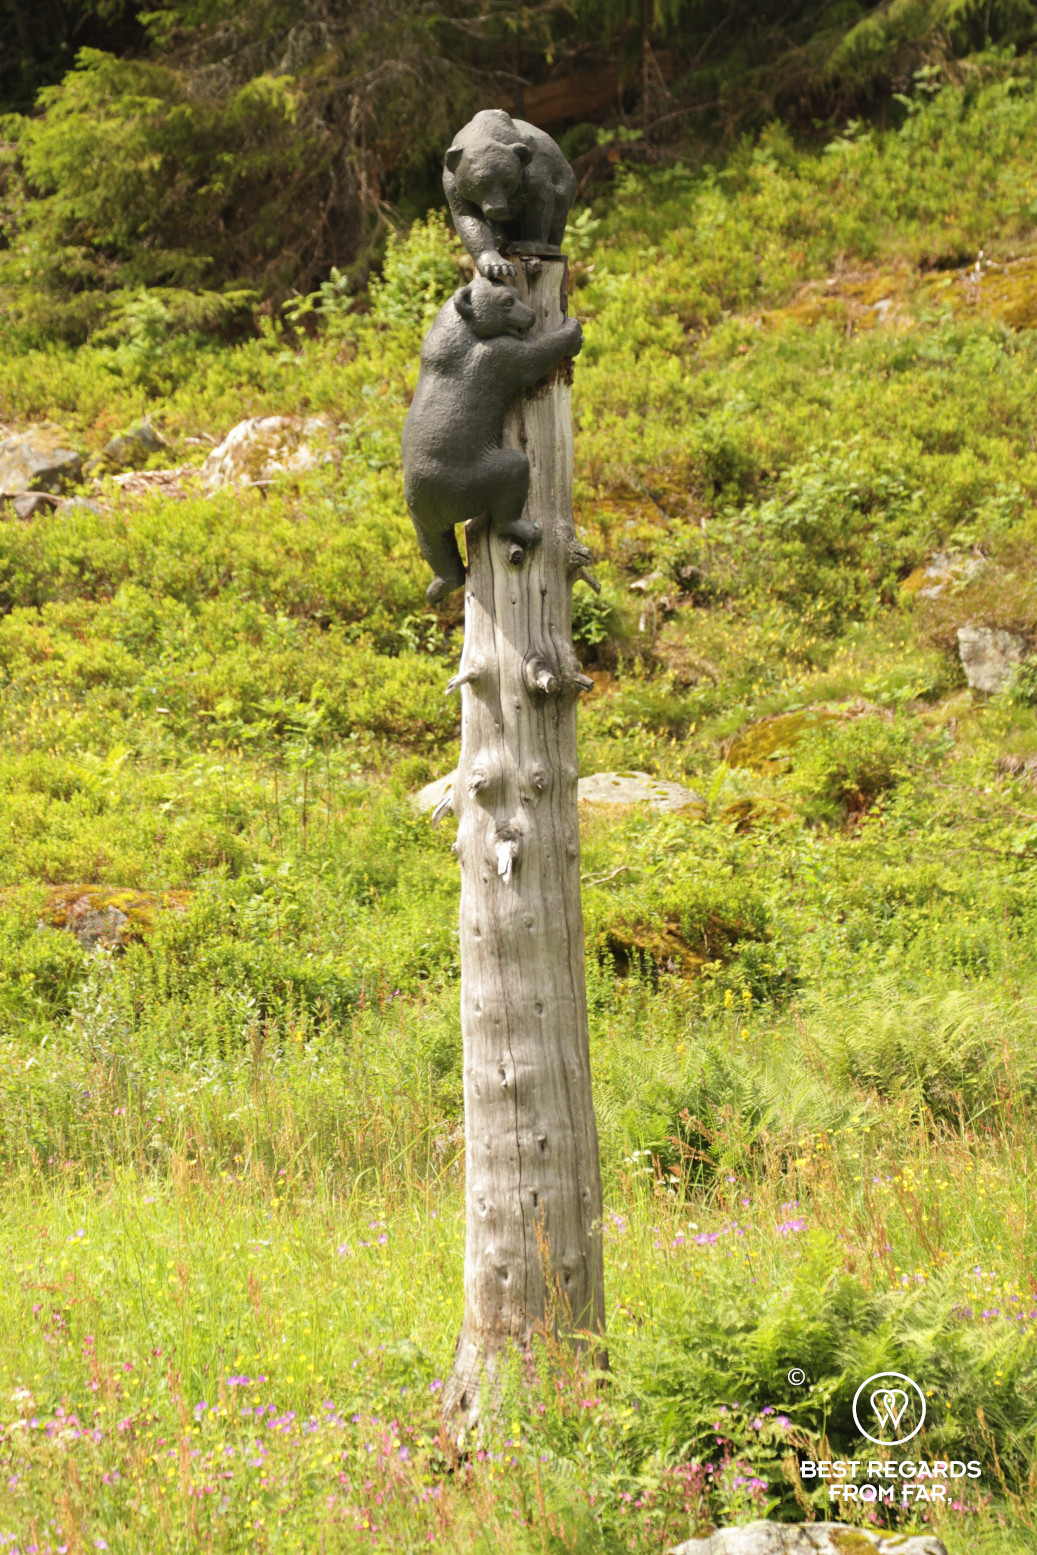 Sculpture of playful bears at Grimdalstunet, Norway